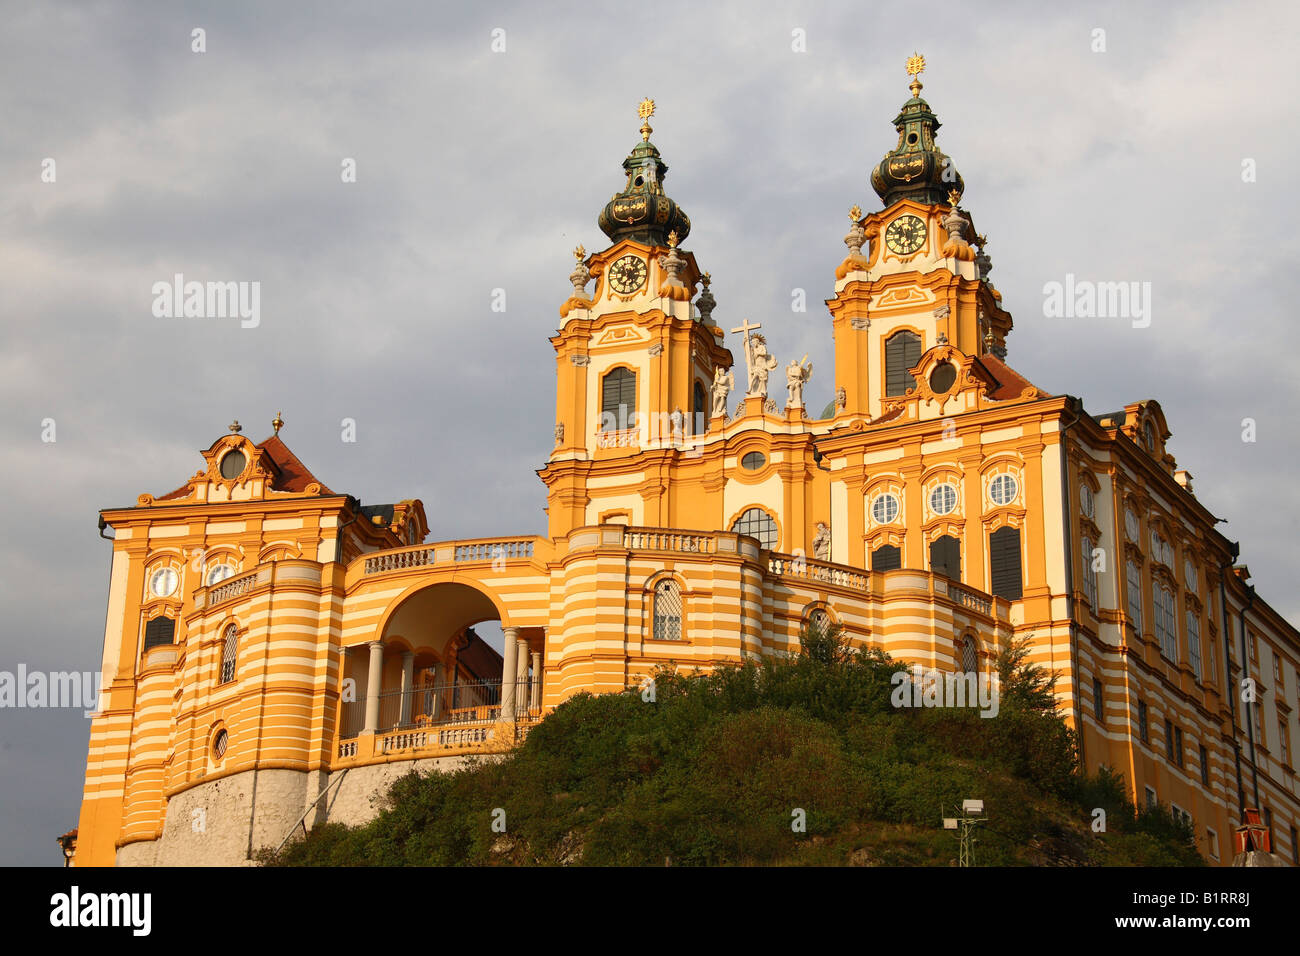 Stift Melk Abbey, Lower Austria, Europe Stock Photo - Alamy